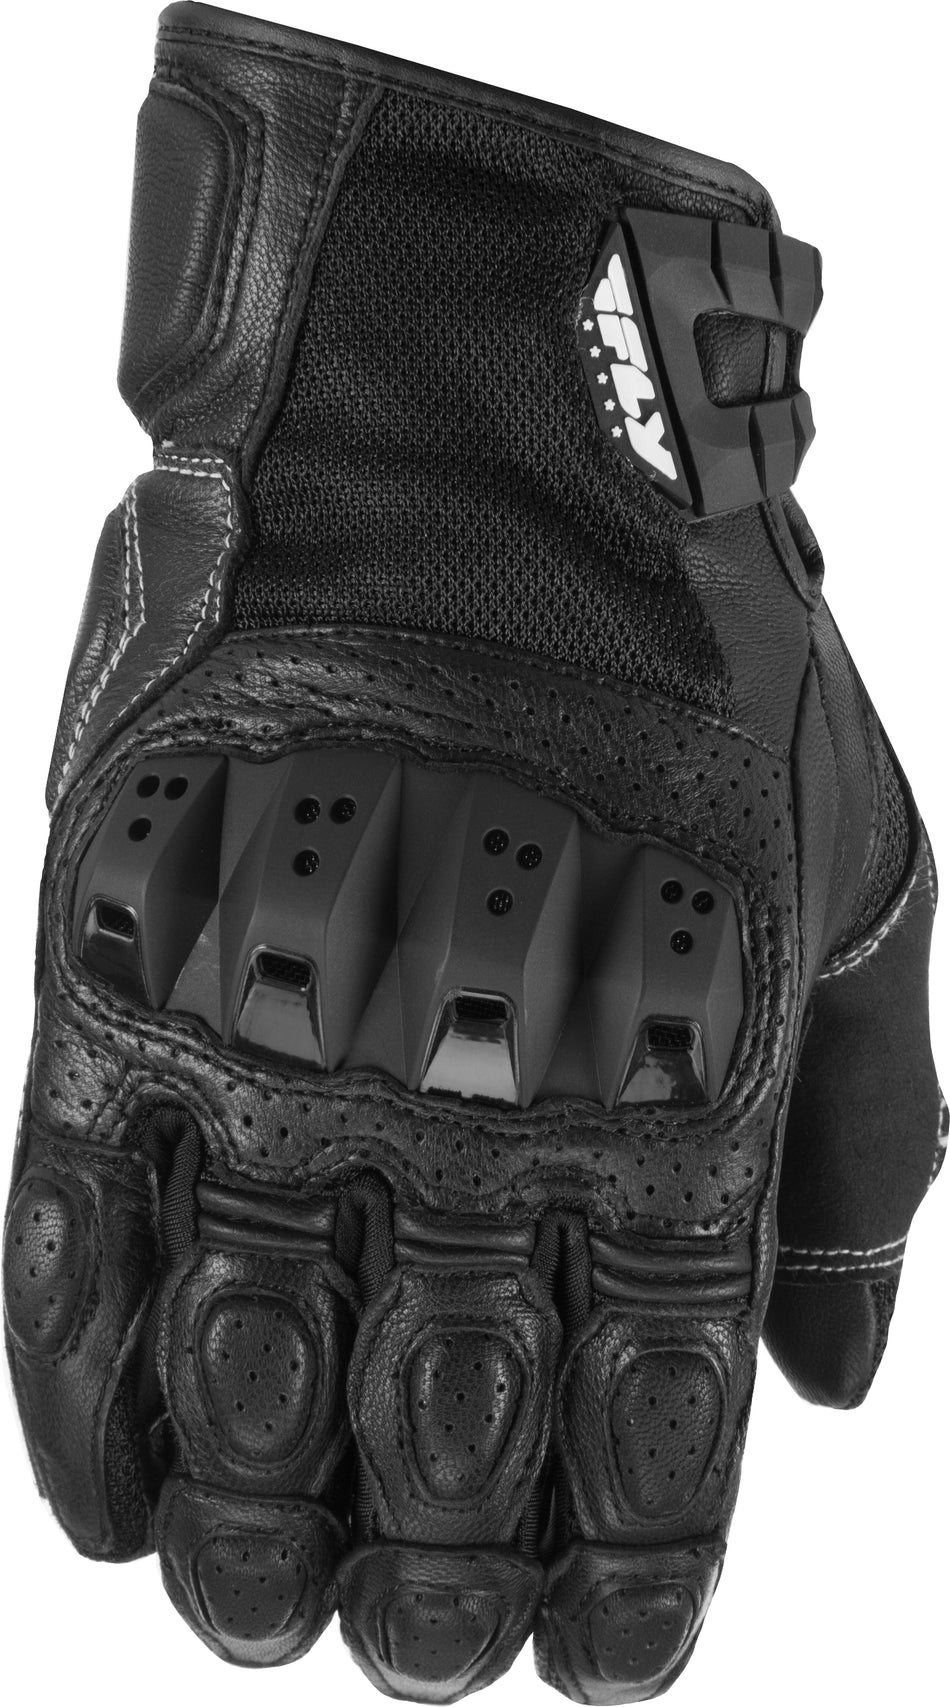 FLY RACING Brawler Gloves Black Lg #5884 476-2040~4